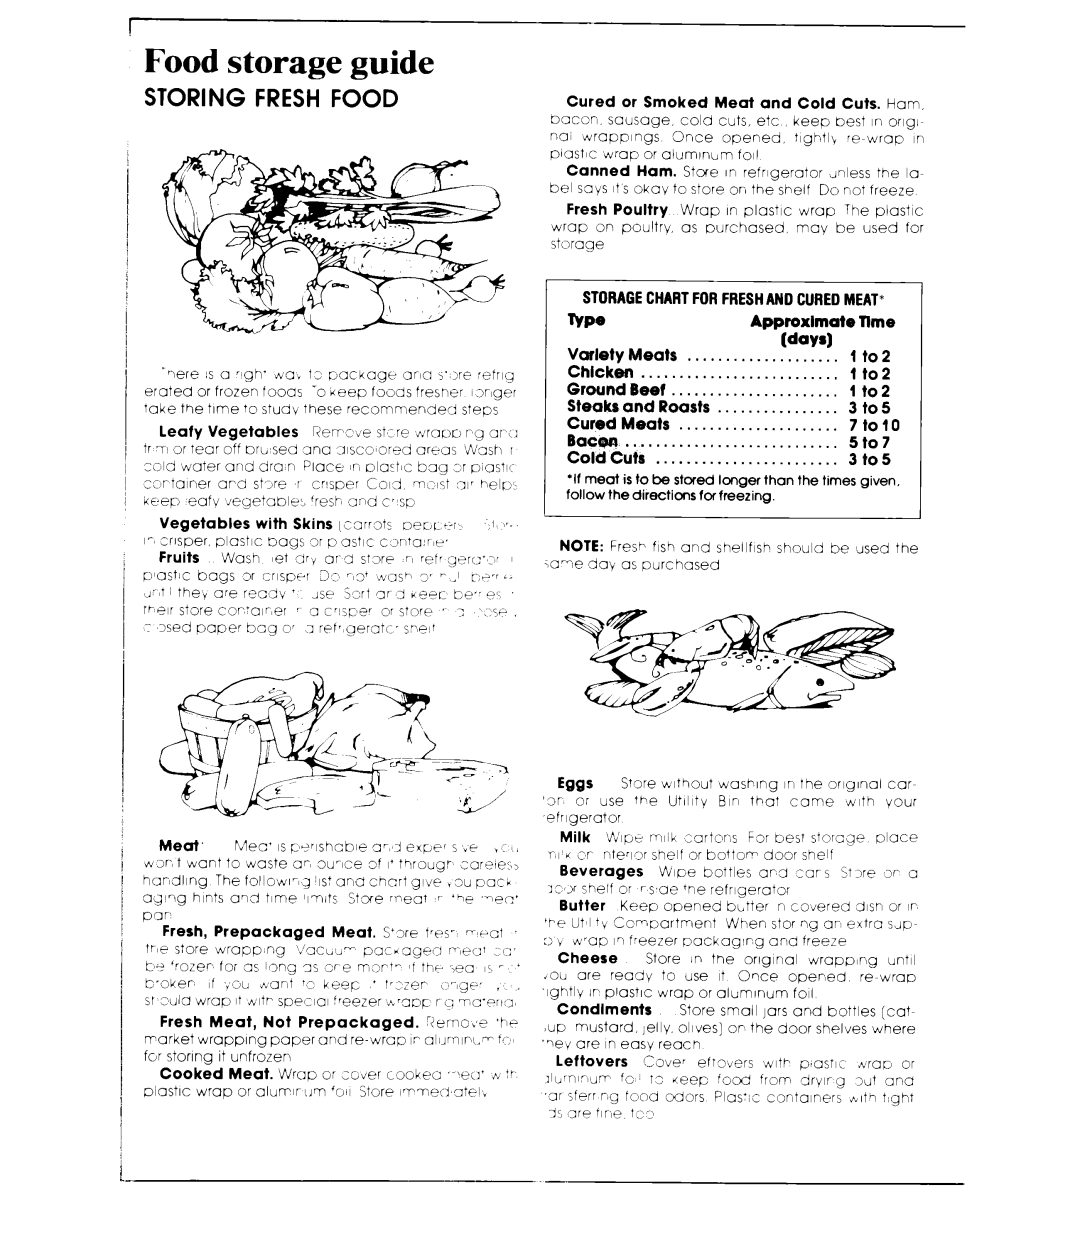 Whirlpool ED22ZM manual Food storage guide, Storing Fresh Food 